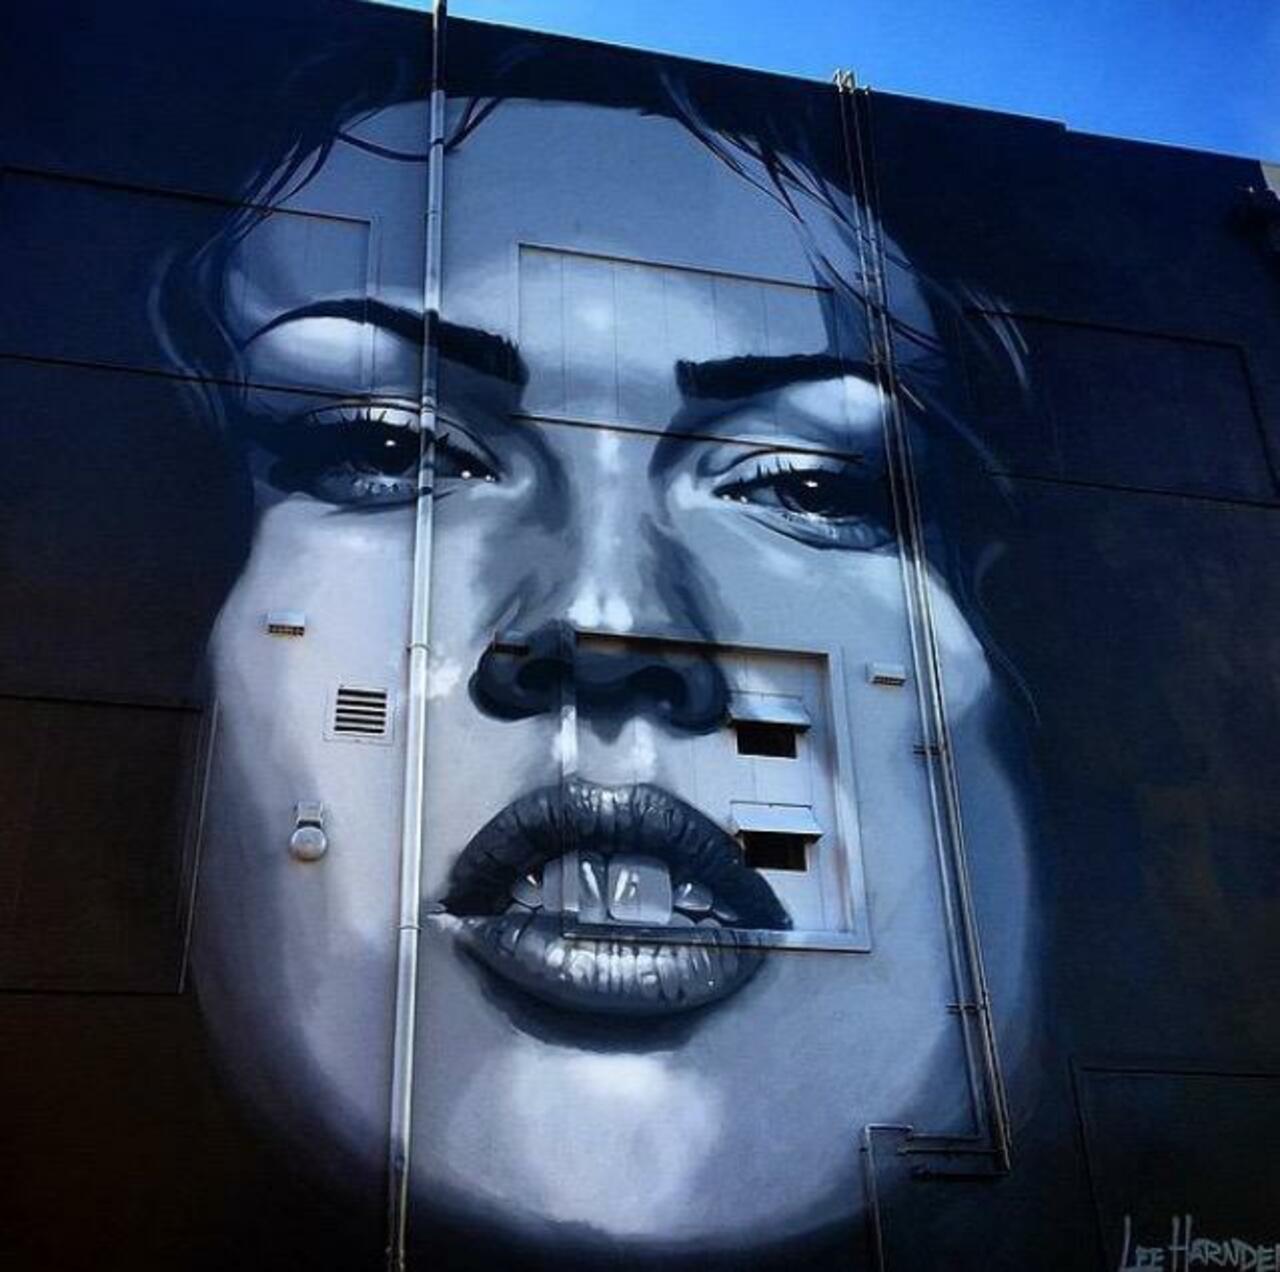 RT @BlossomTweetMe: Cool! Street Art by Irocka 

#art #graffiti #mural #streetart http://t.co/O4oBcGo0mY MT @GoogleStreetArt